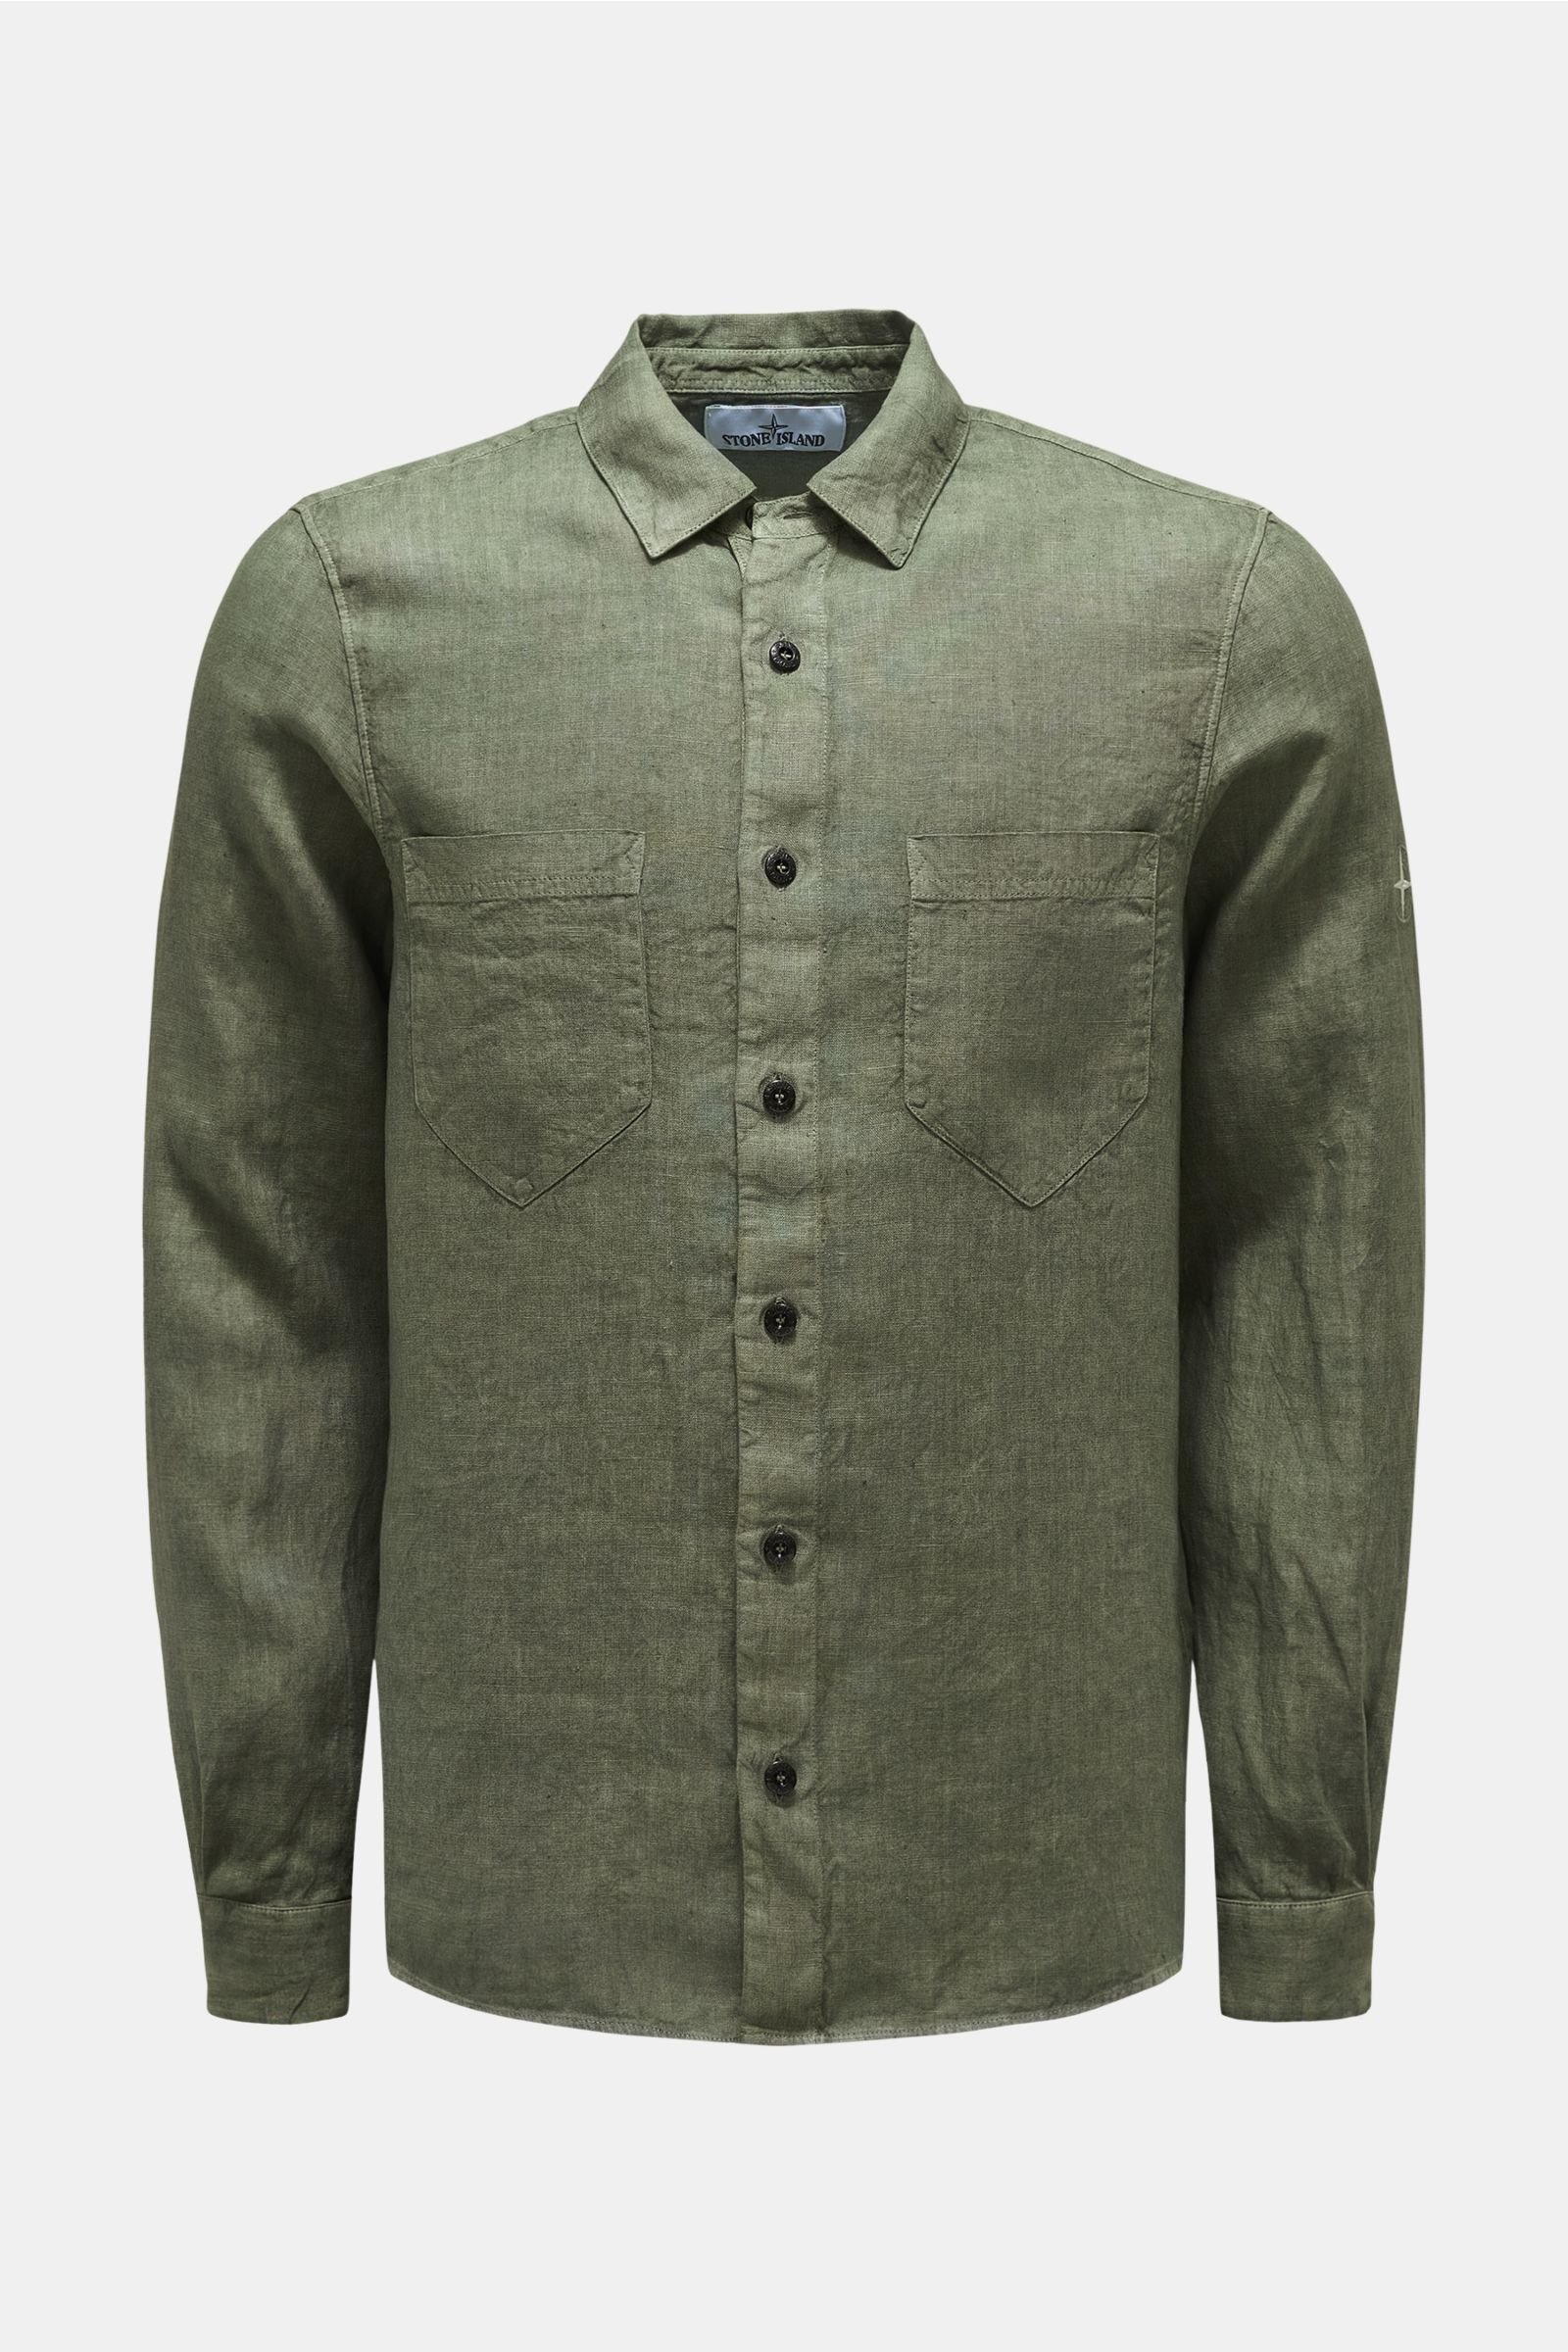 Linen shirt narrow collar grey-green